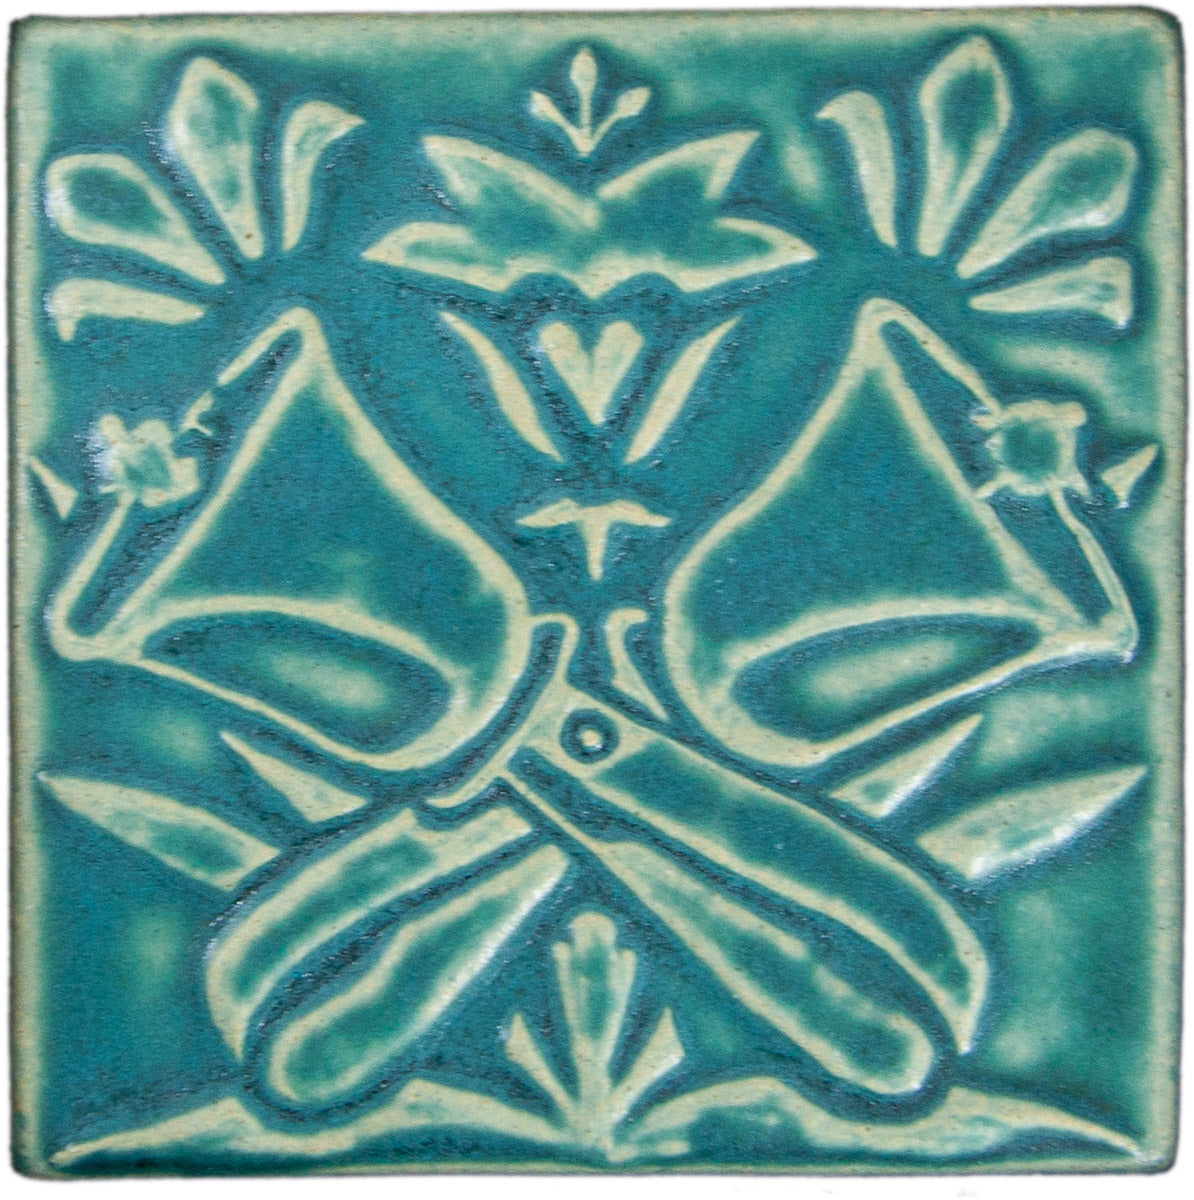 Ceramic Tile - with handbell design, seafoam